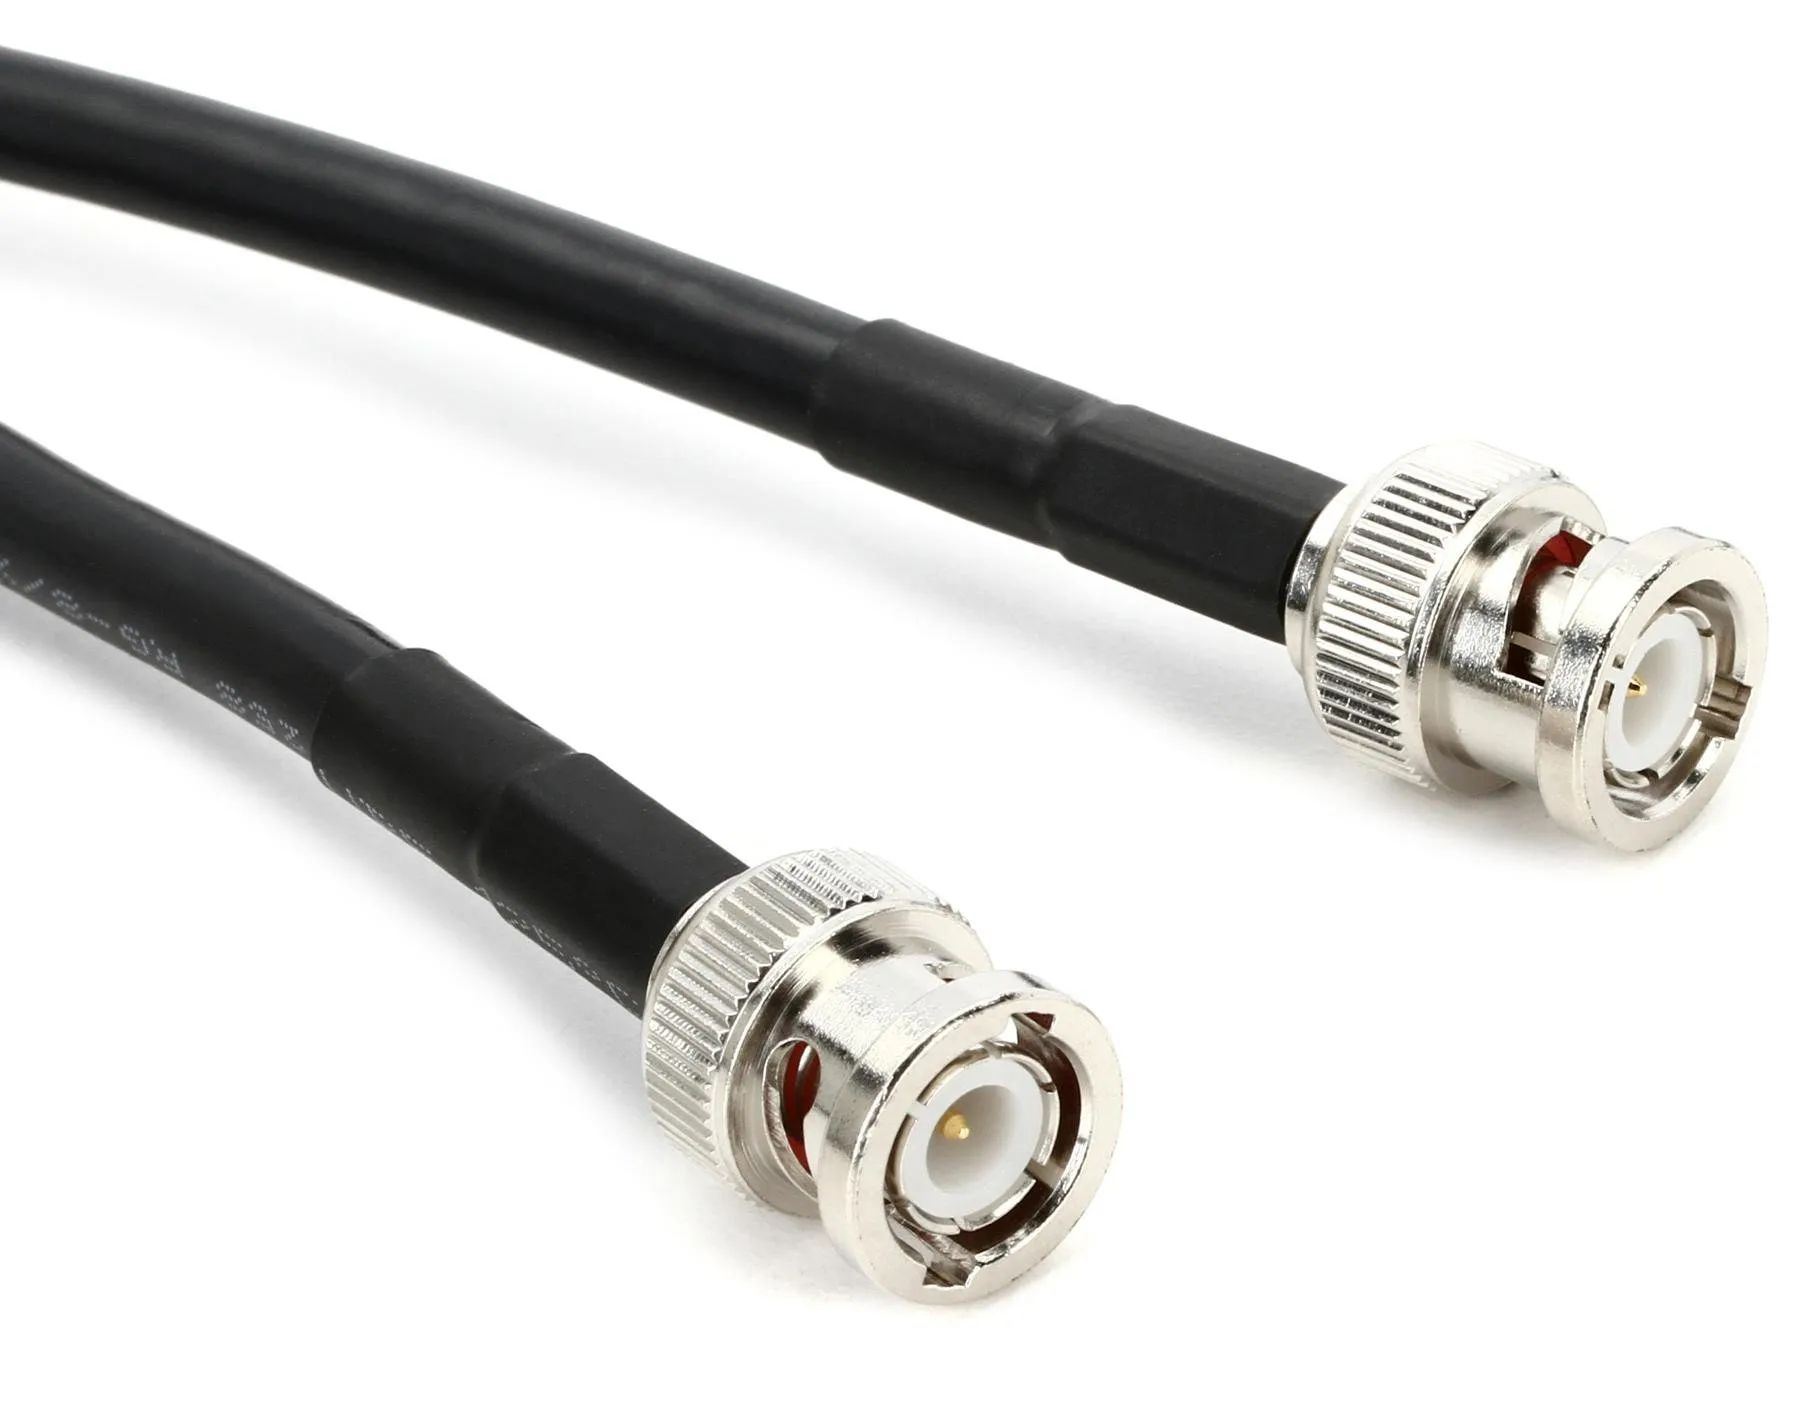 Zero connect. Антенный кабель ua825 Shure. Ua825 25' UHF Coaxial Antenna Cable. Shure ua825 антенный кабель (8м) для UHF систем. BNC Shure.